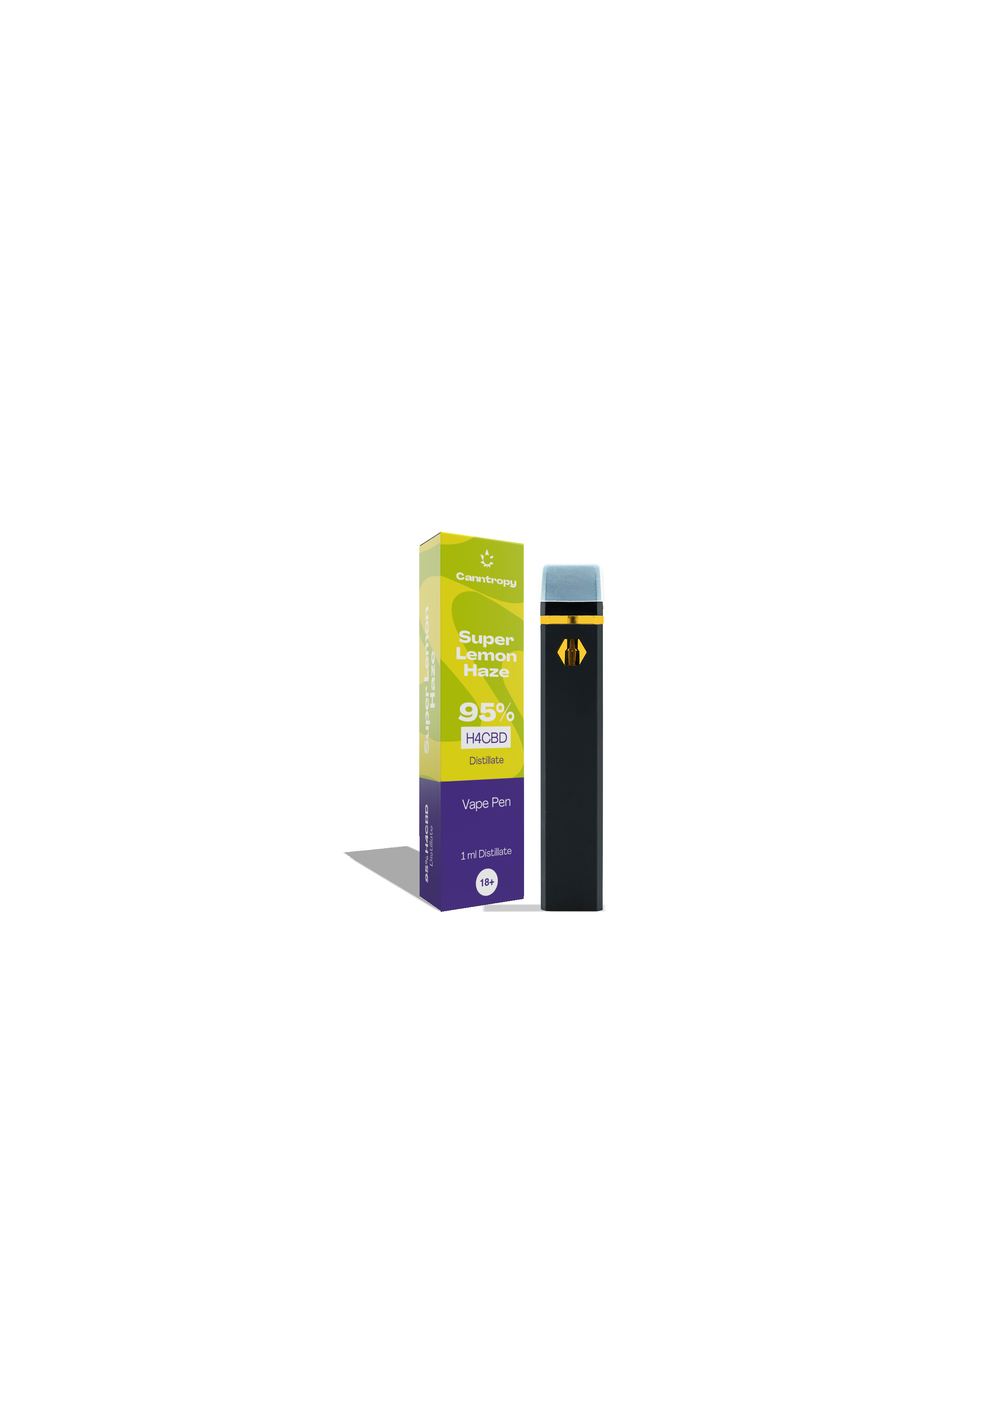 H4CBD Sigaretta Elettronica Usa e Getta - 1ml 95% H4CBD - Super Lemon Haze - 300/600 Puffs - Canntropy